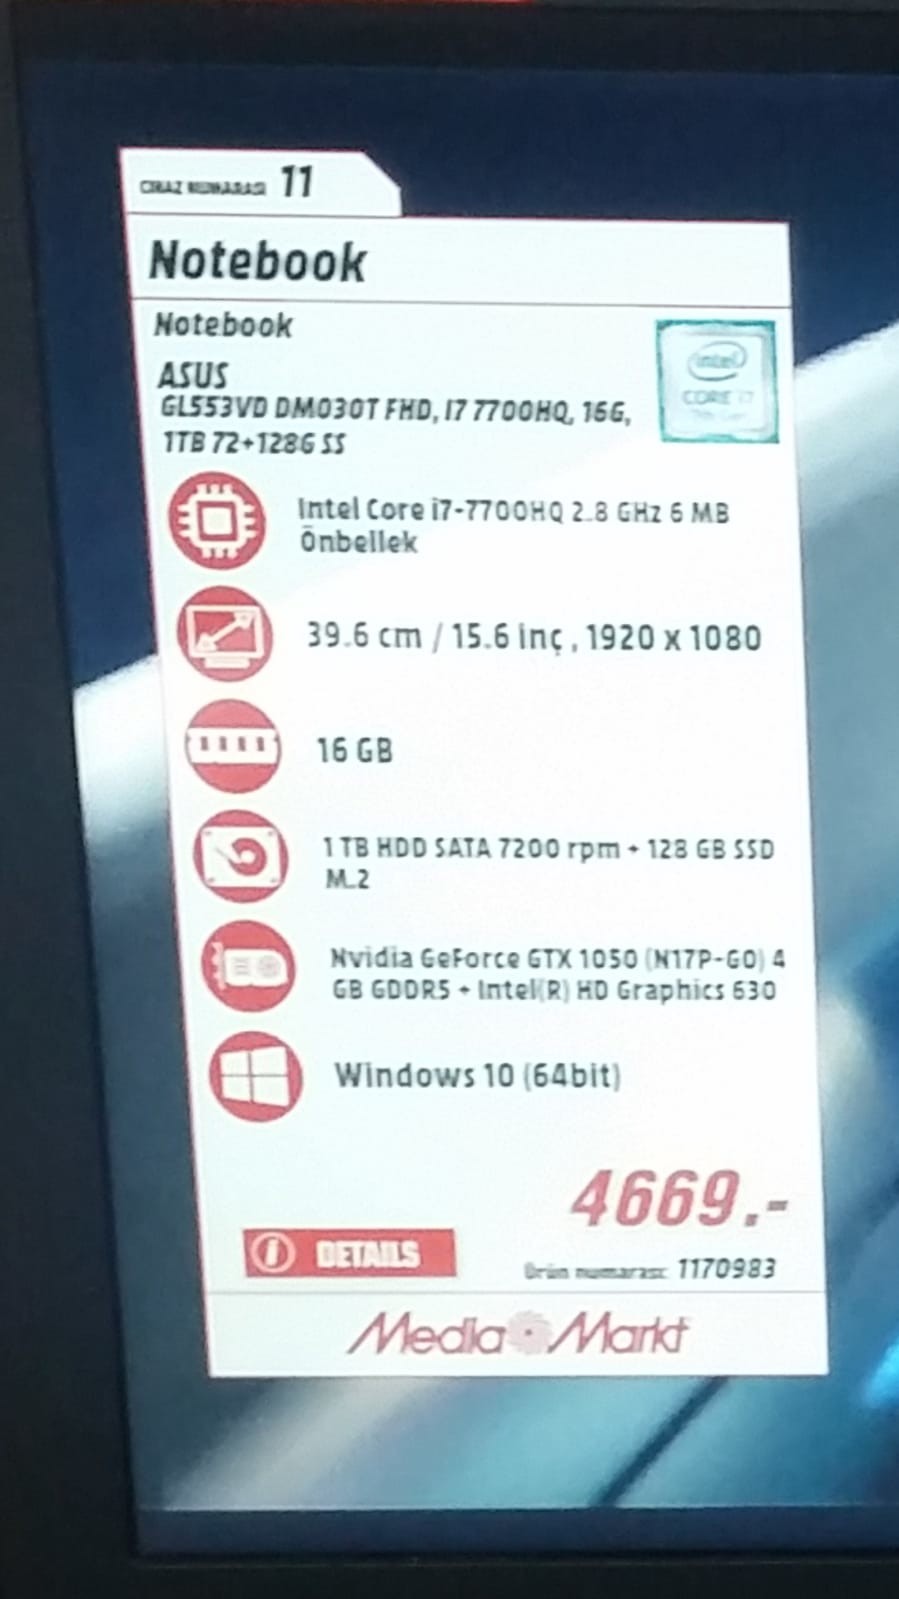 ASUS - I7 7700HQ 2.8GHZ - GTX1050 4GB - 16GB RAM - 4669 TL